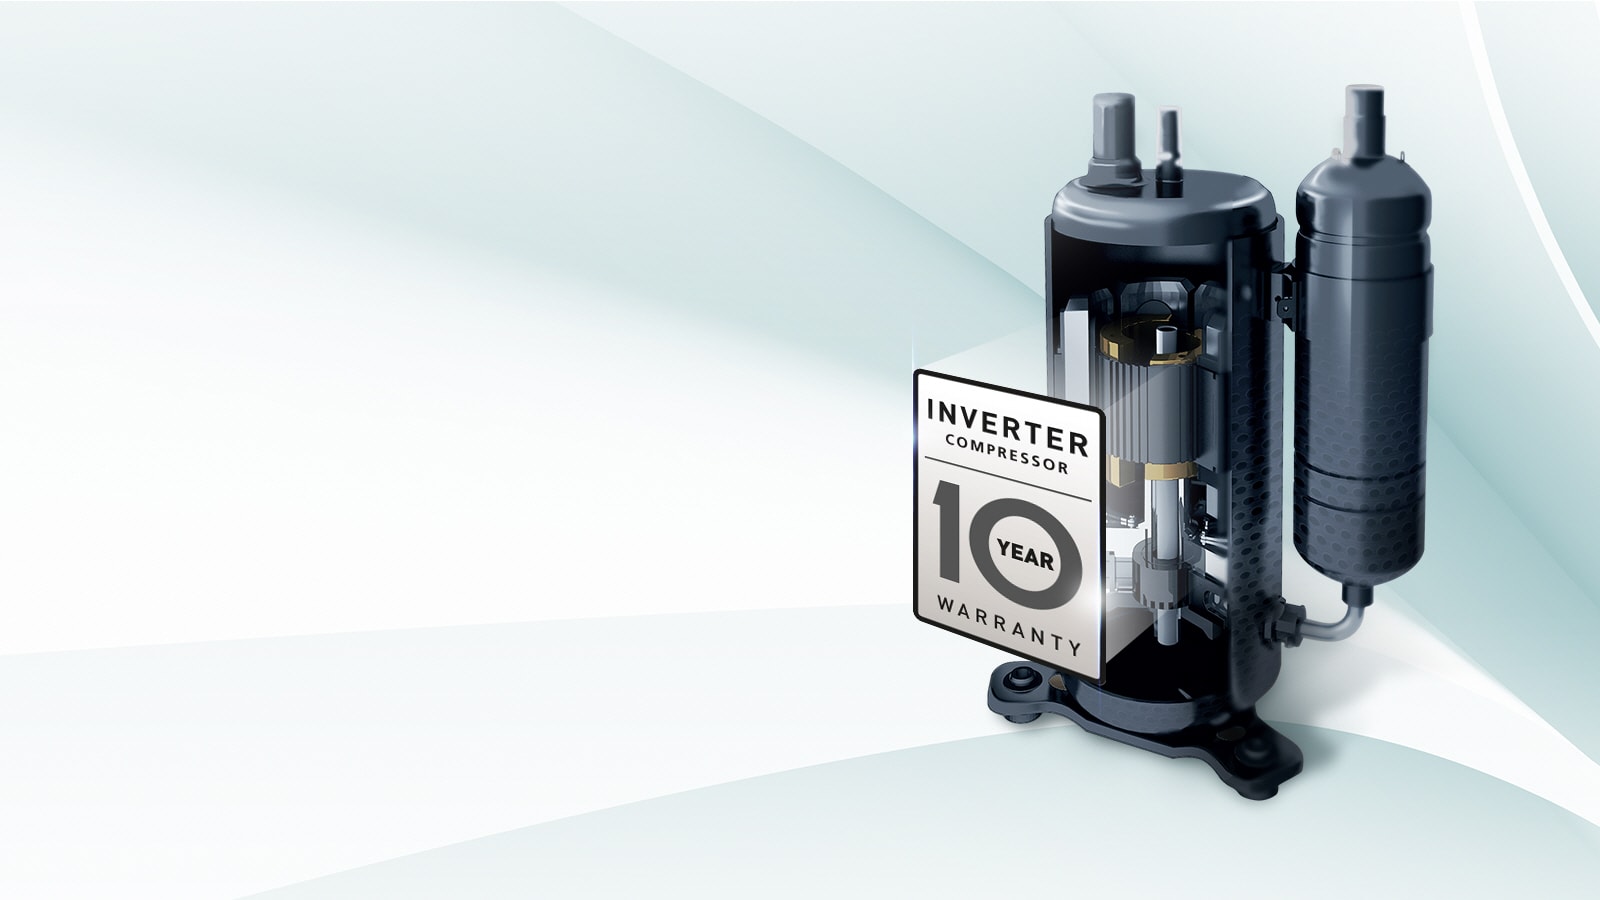 EU_Smart Inverter_2016_Feature_02_Inverter Compressor with 10 Year Warranty_D